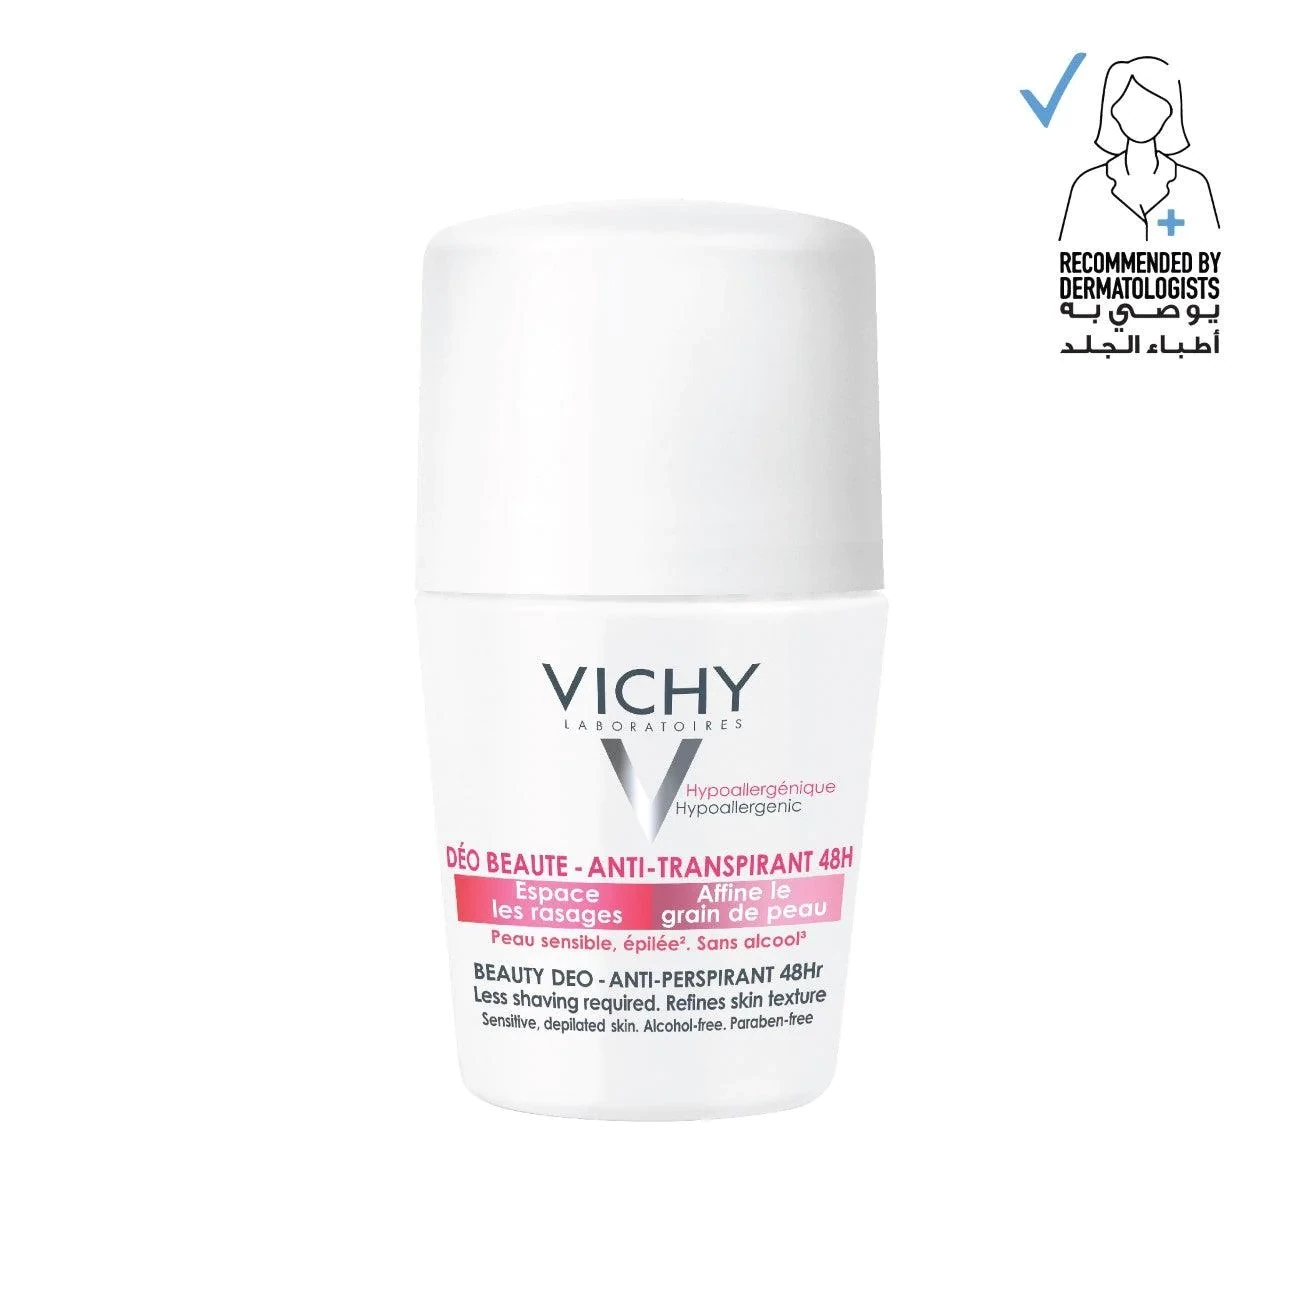 VICHY - Beauty Deo - 48H Anti-Perspirant